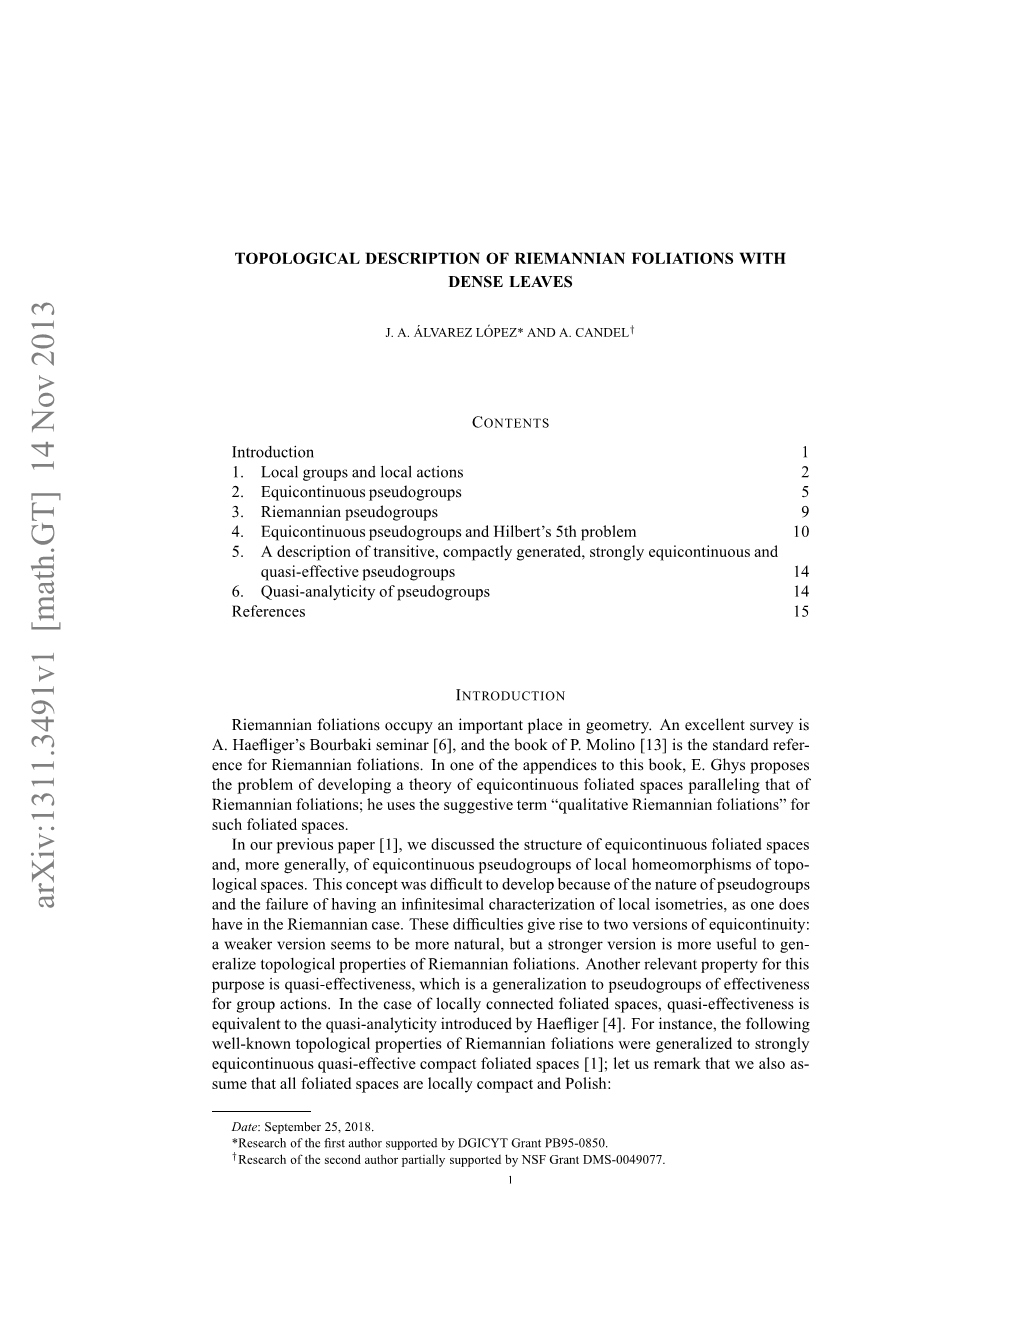 Topological Description of Riemannian Foliations with Dense